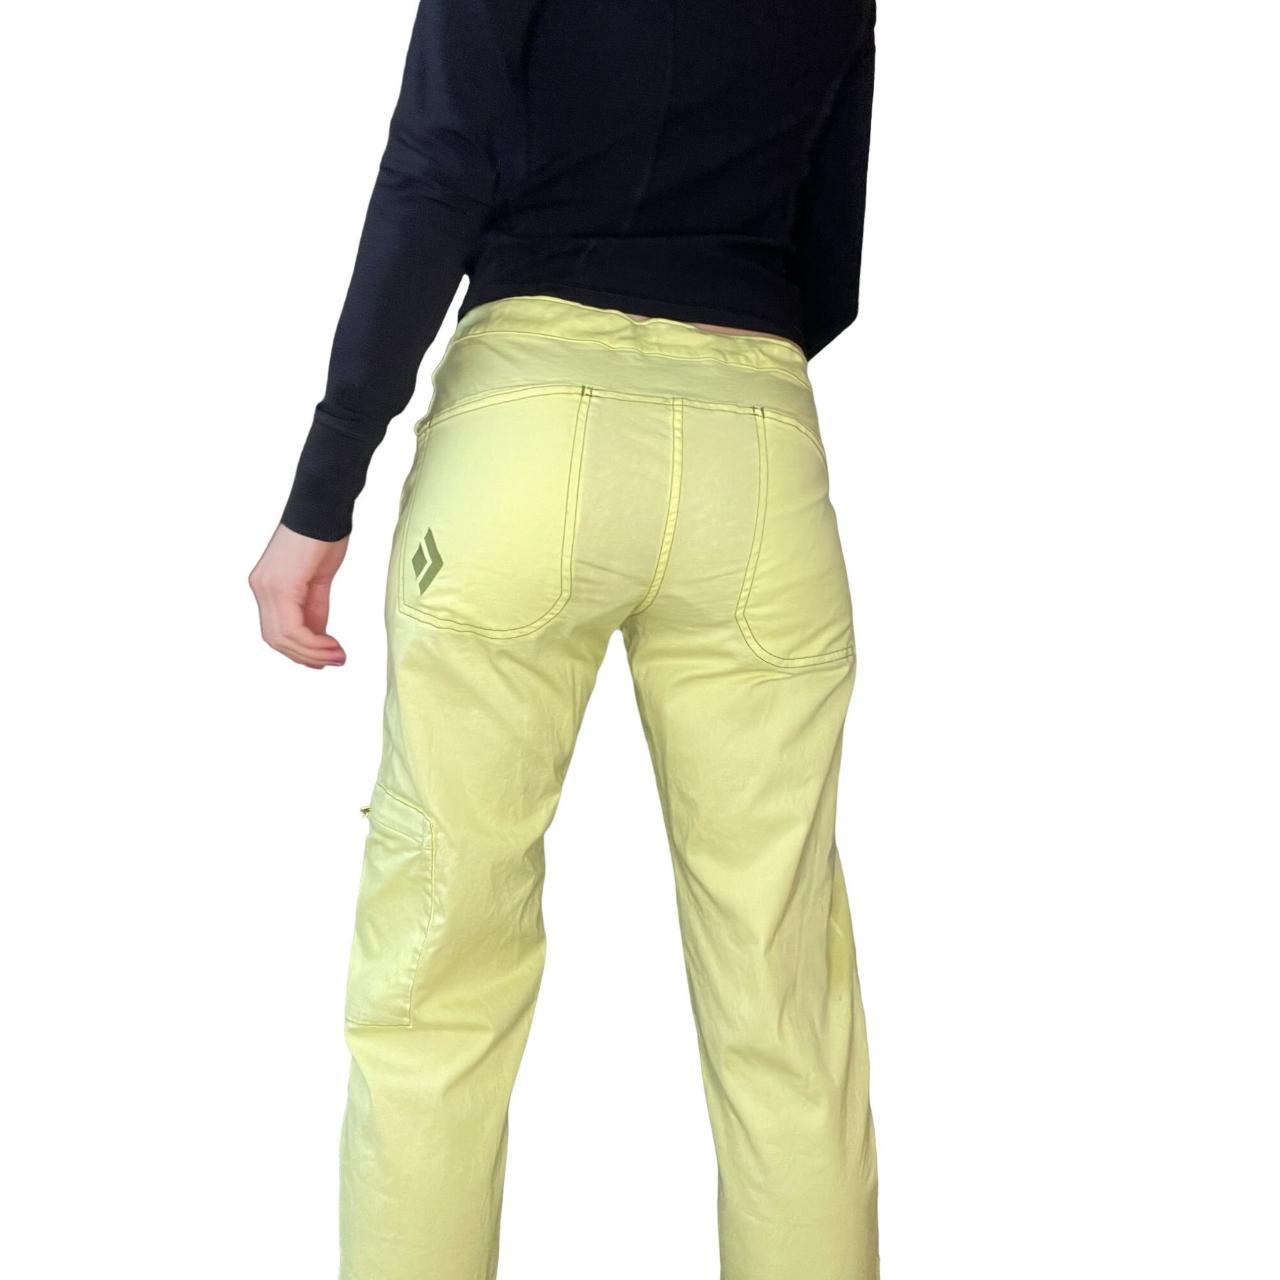 Black Diamond Women's Yellow and Green Trousers (3)